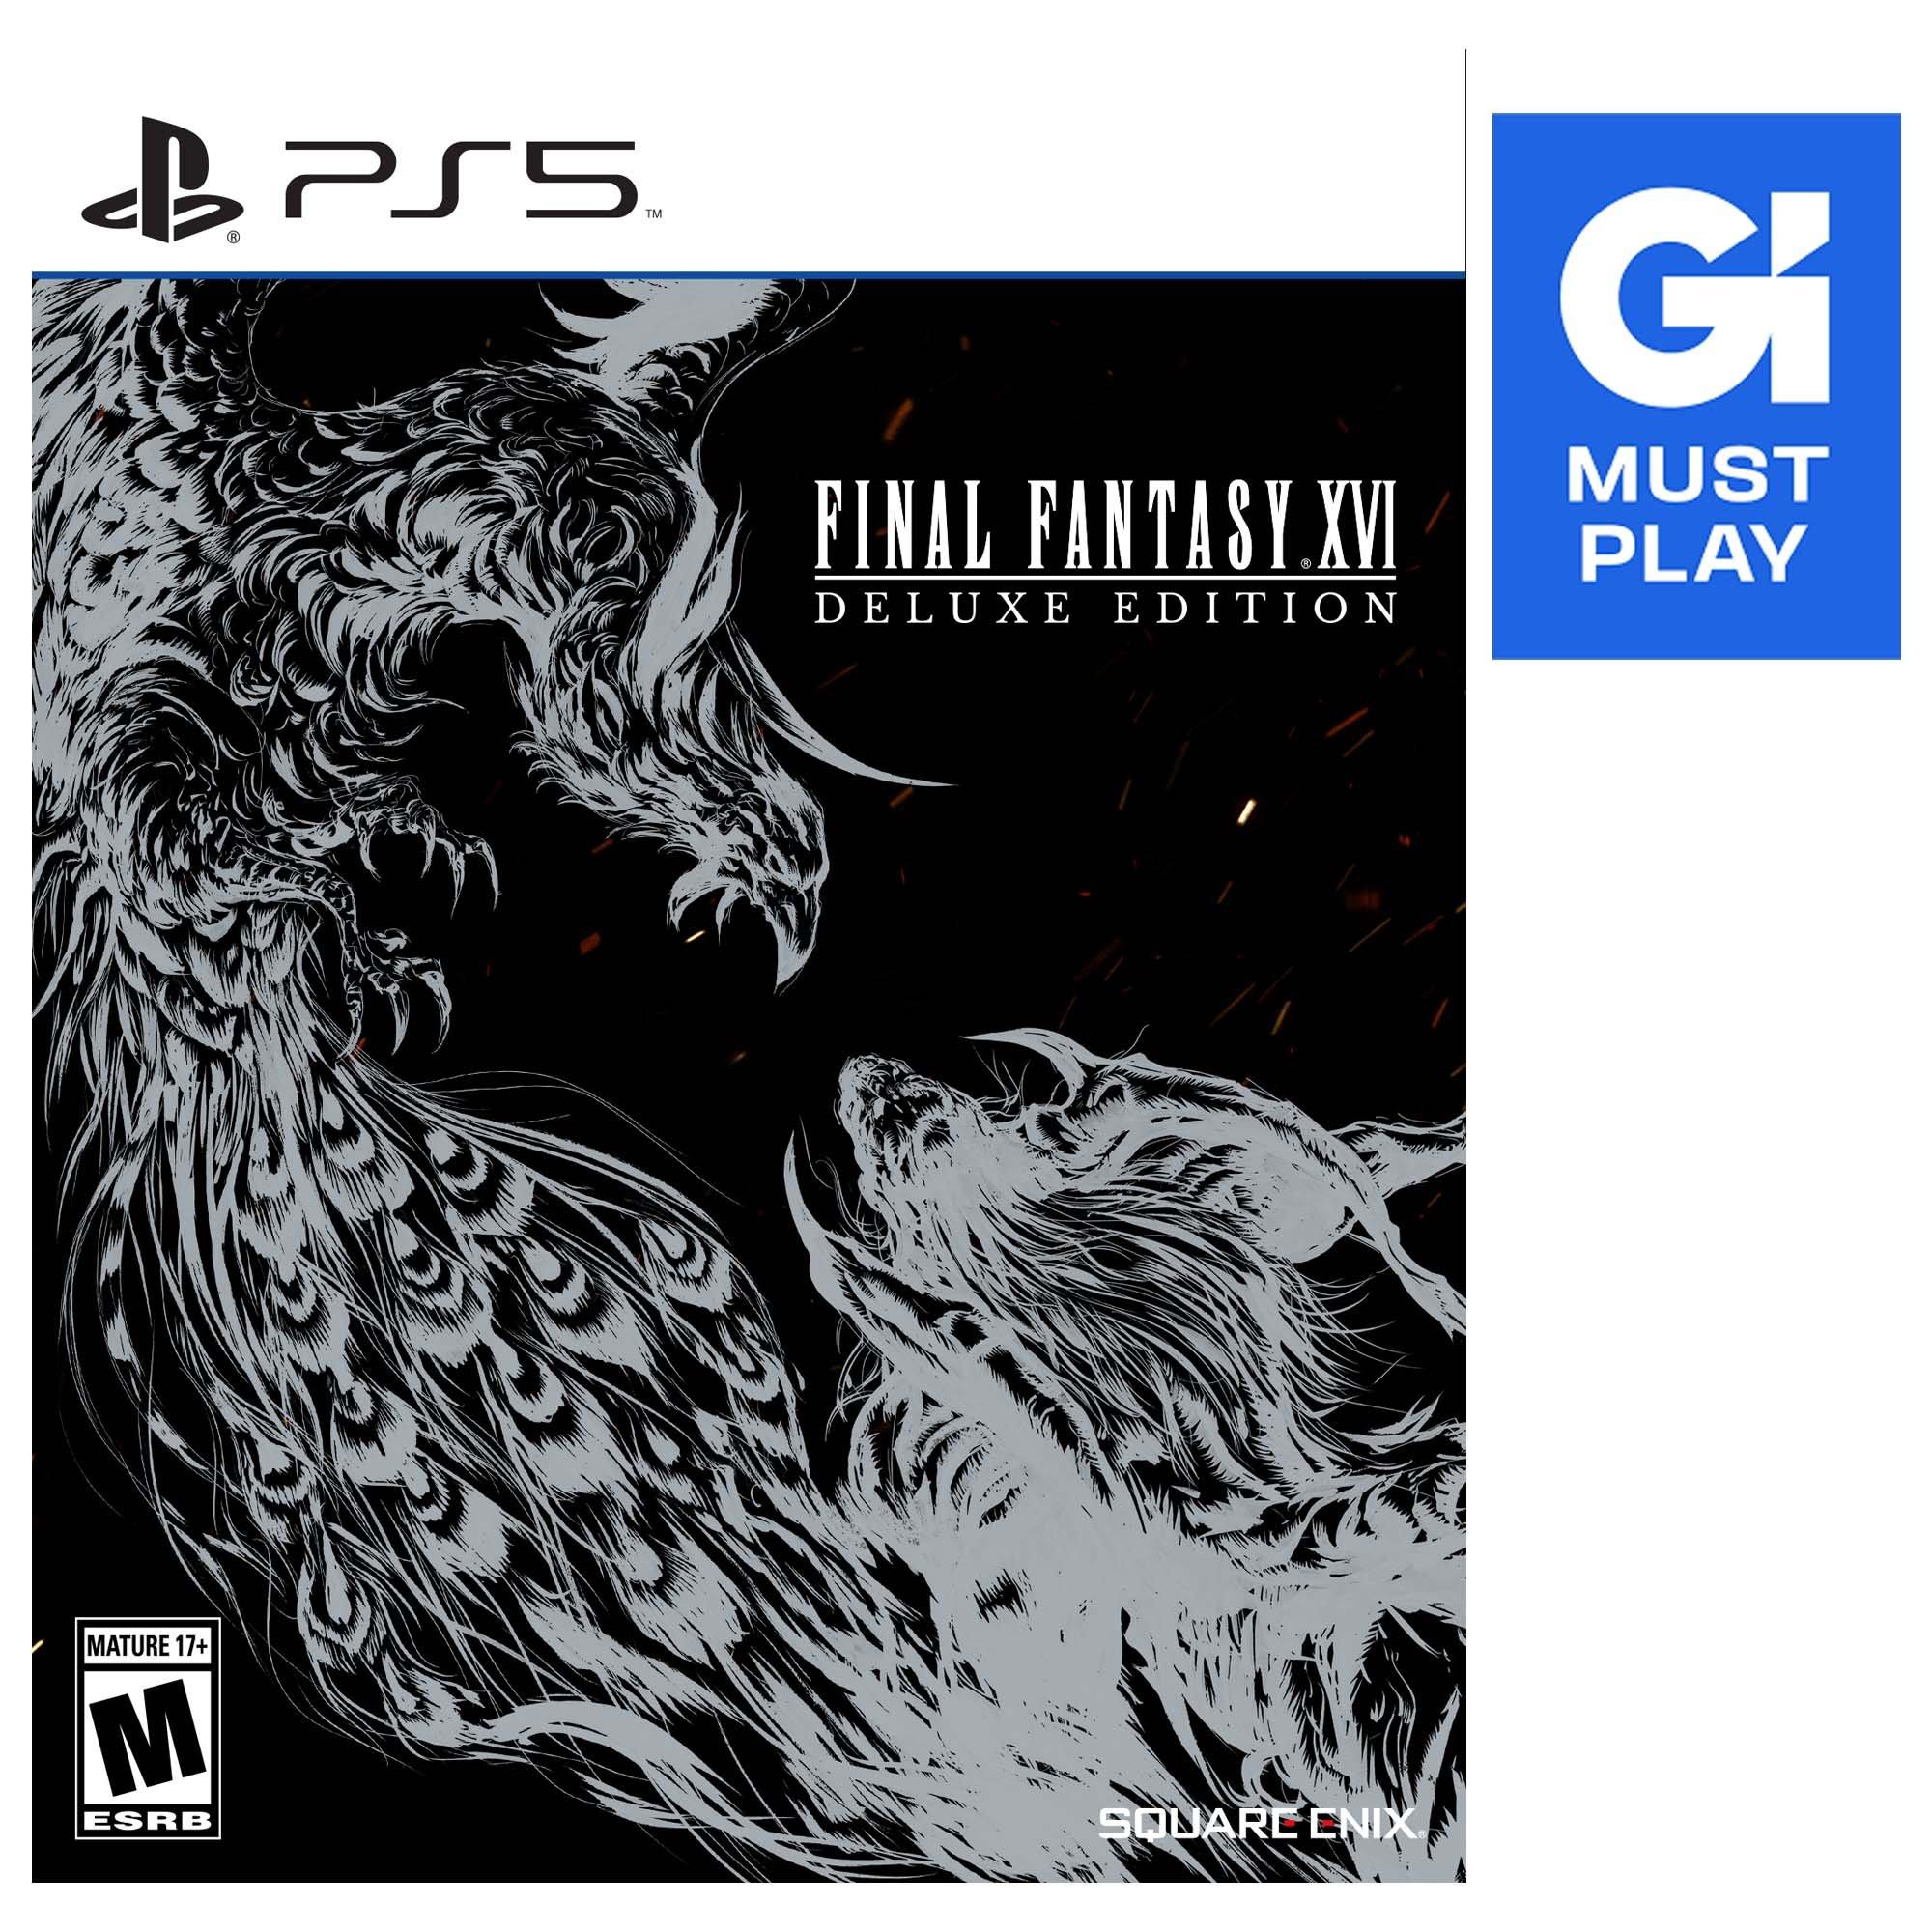 Final Fantasy XVI Deluxe Edition - PlayStation 5, Square Enix